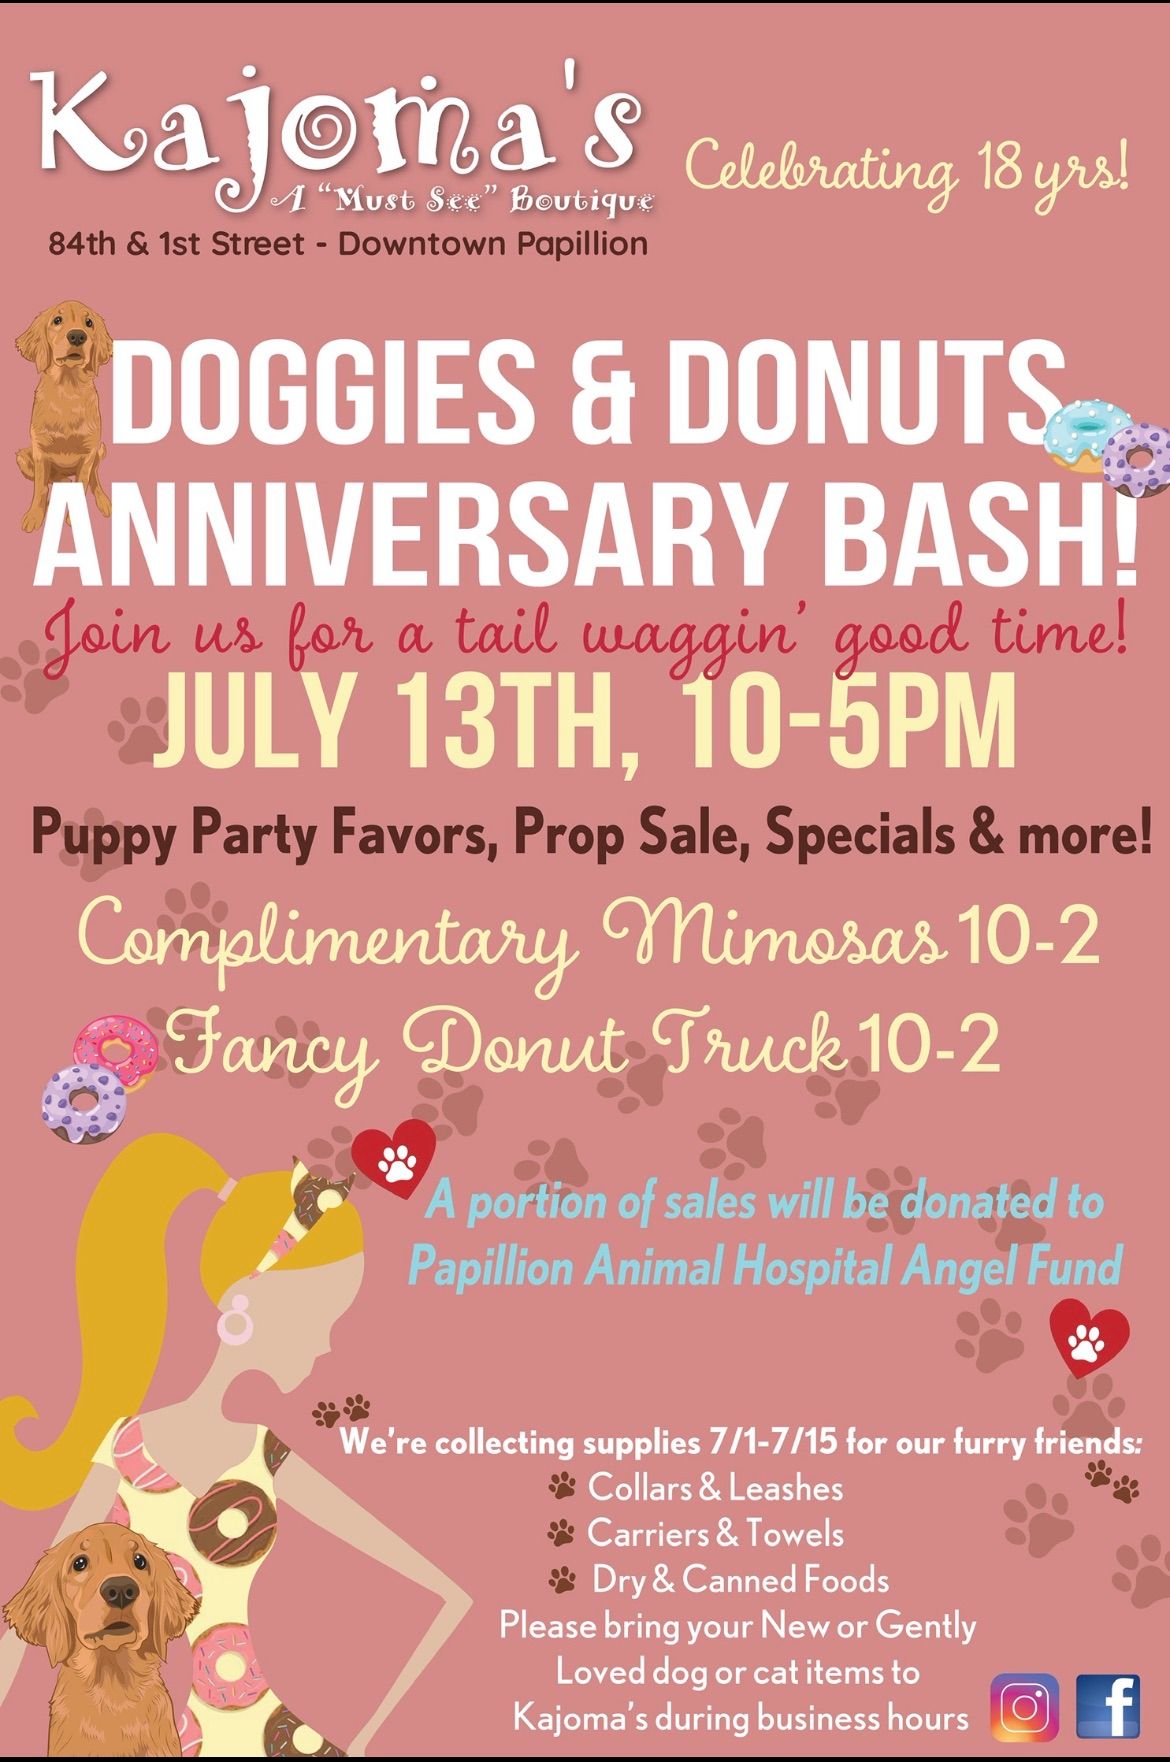 Doggies & Donuts 18th Anniversary Bash